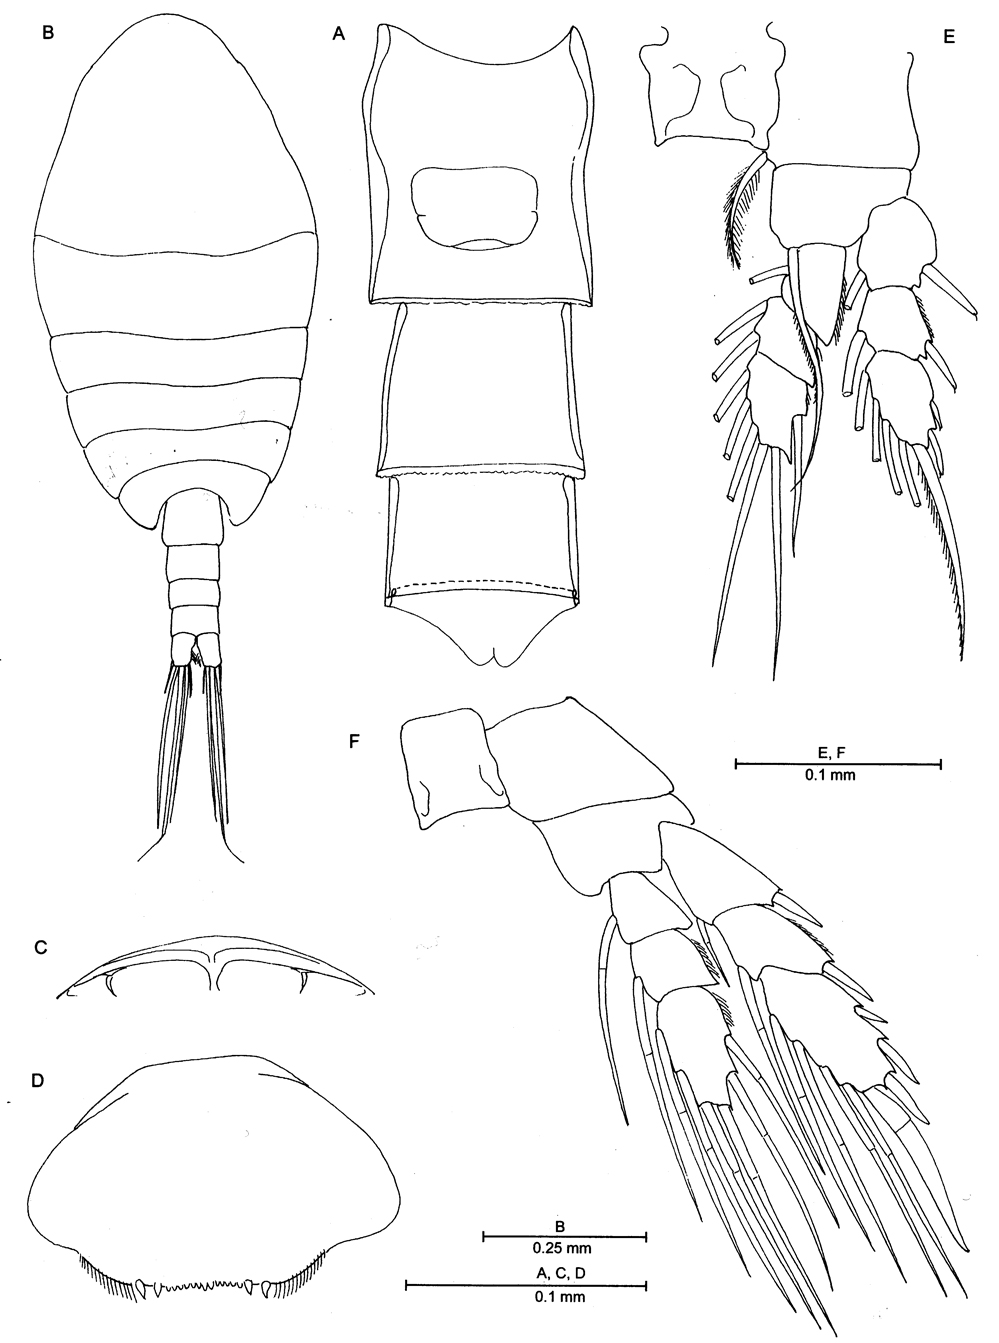 Species Oinella longiseta - Plate 3 of morphological figures